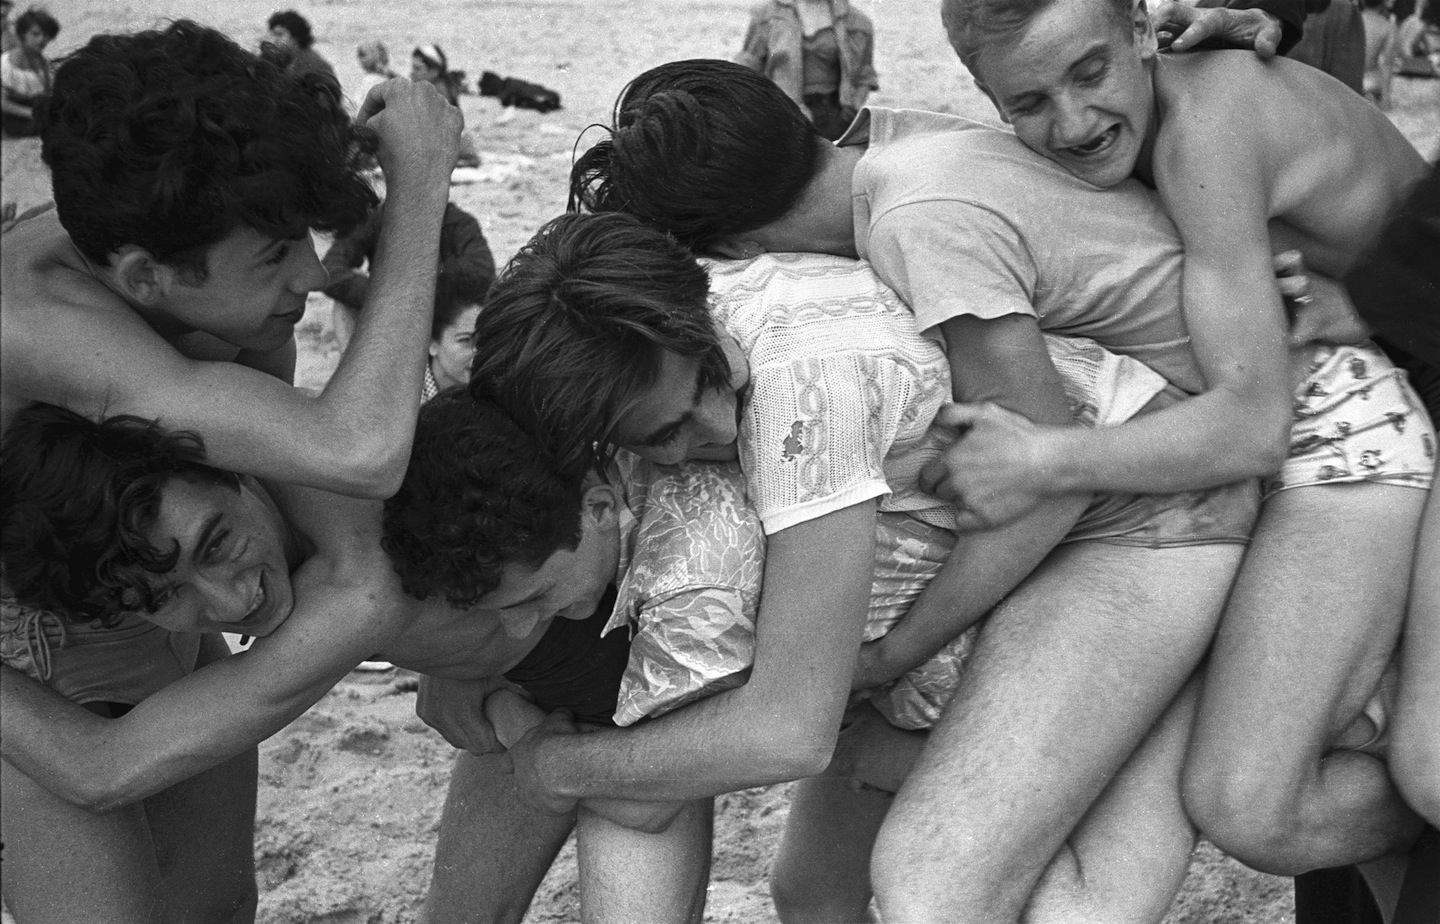 Leap frog beach, 1965